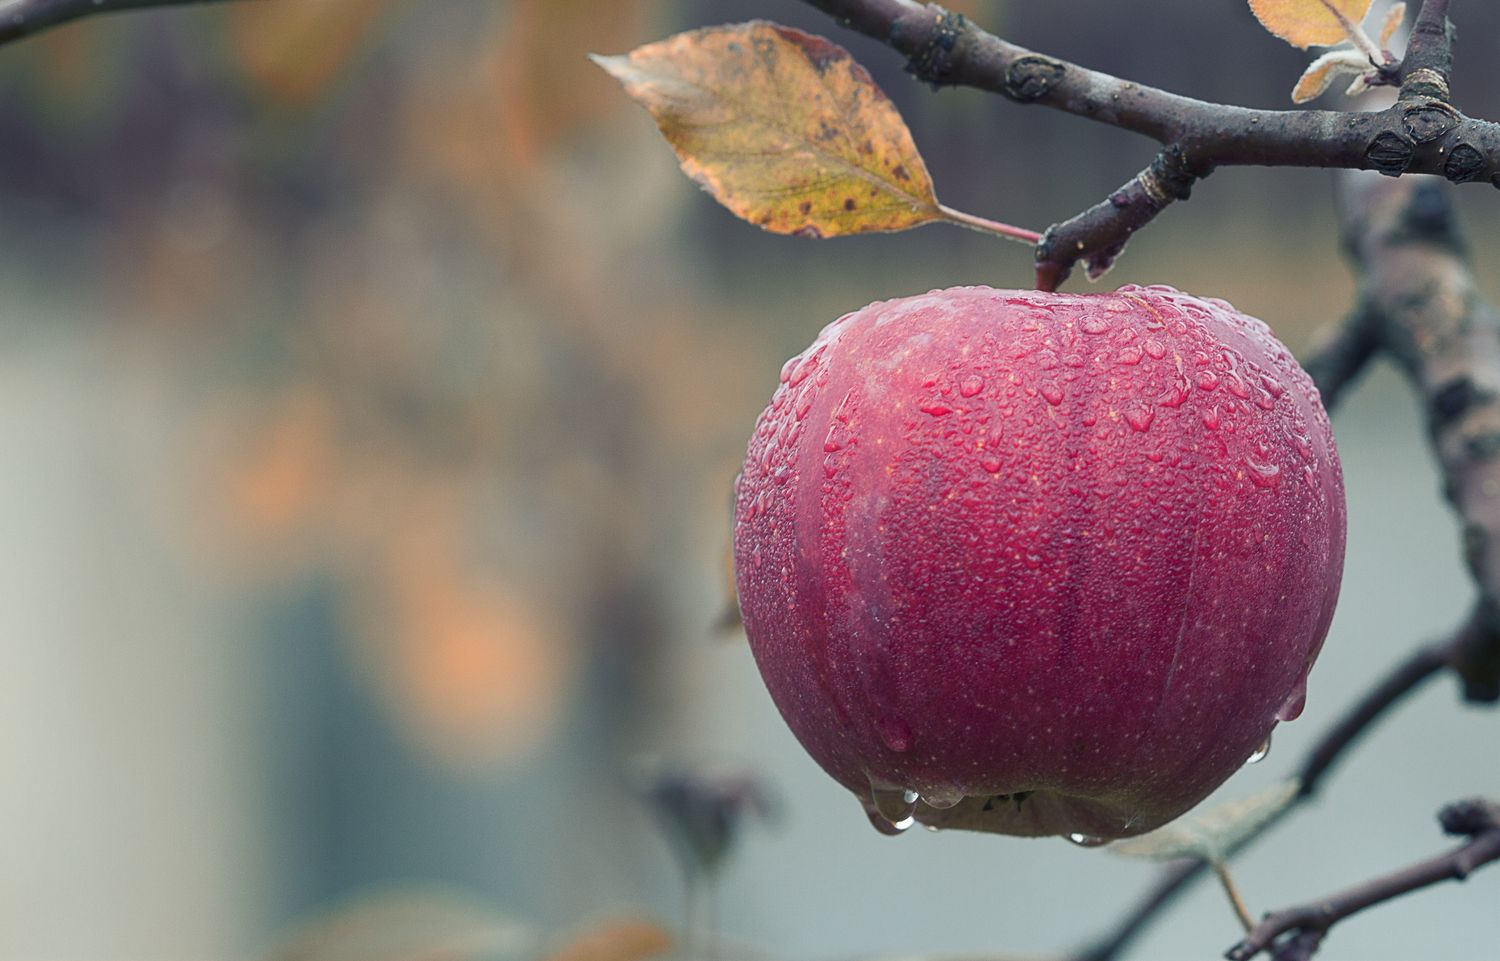 A beautiful photo of an apple